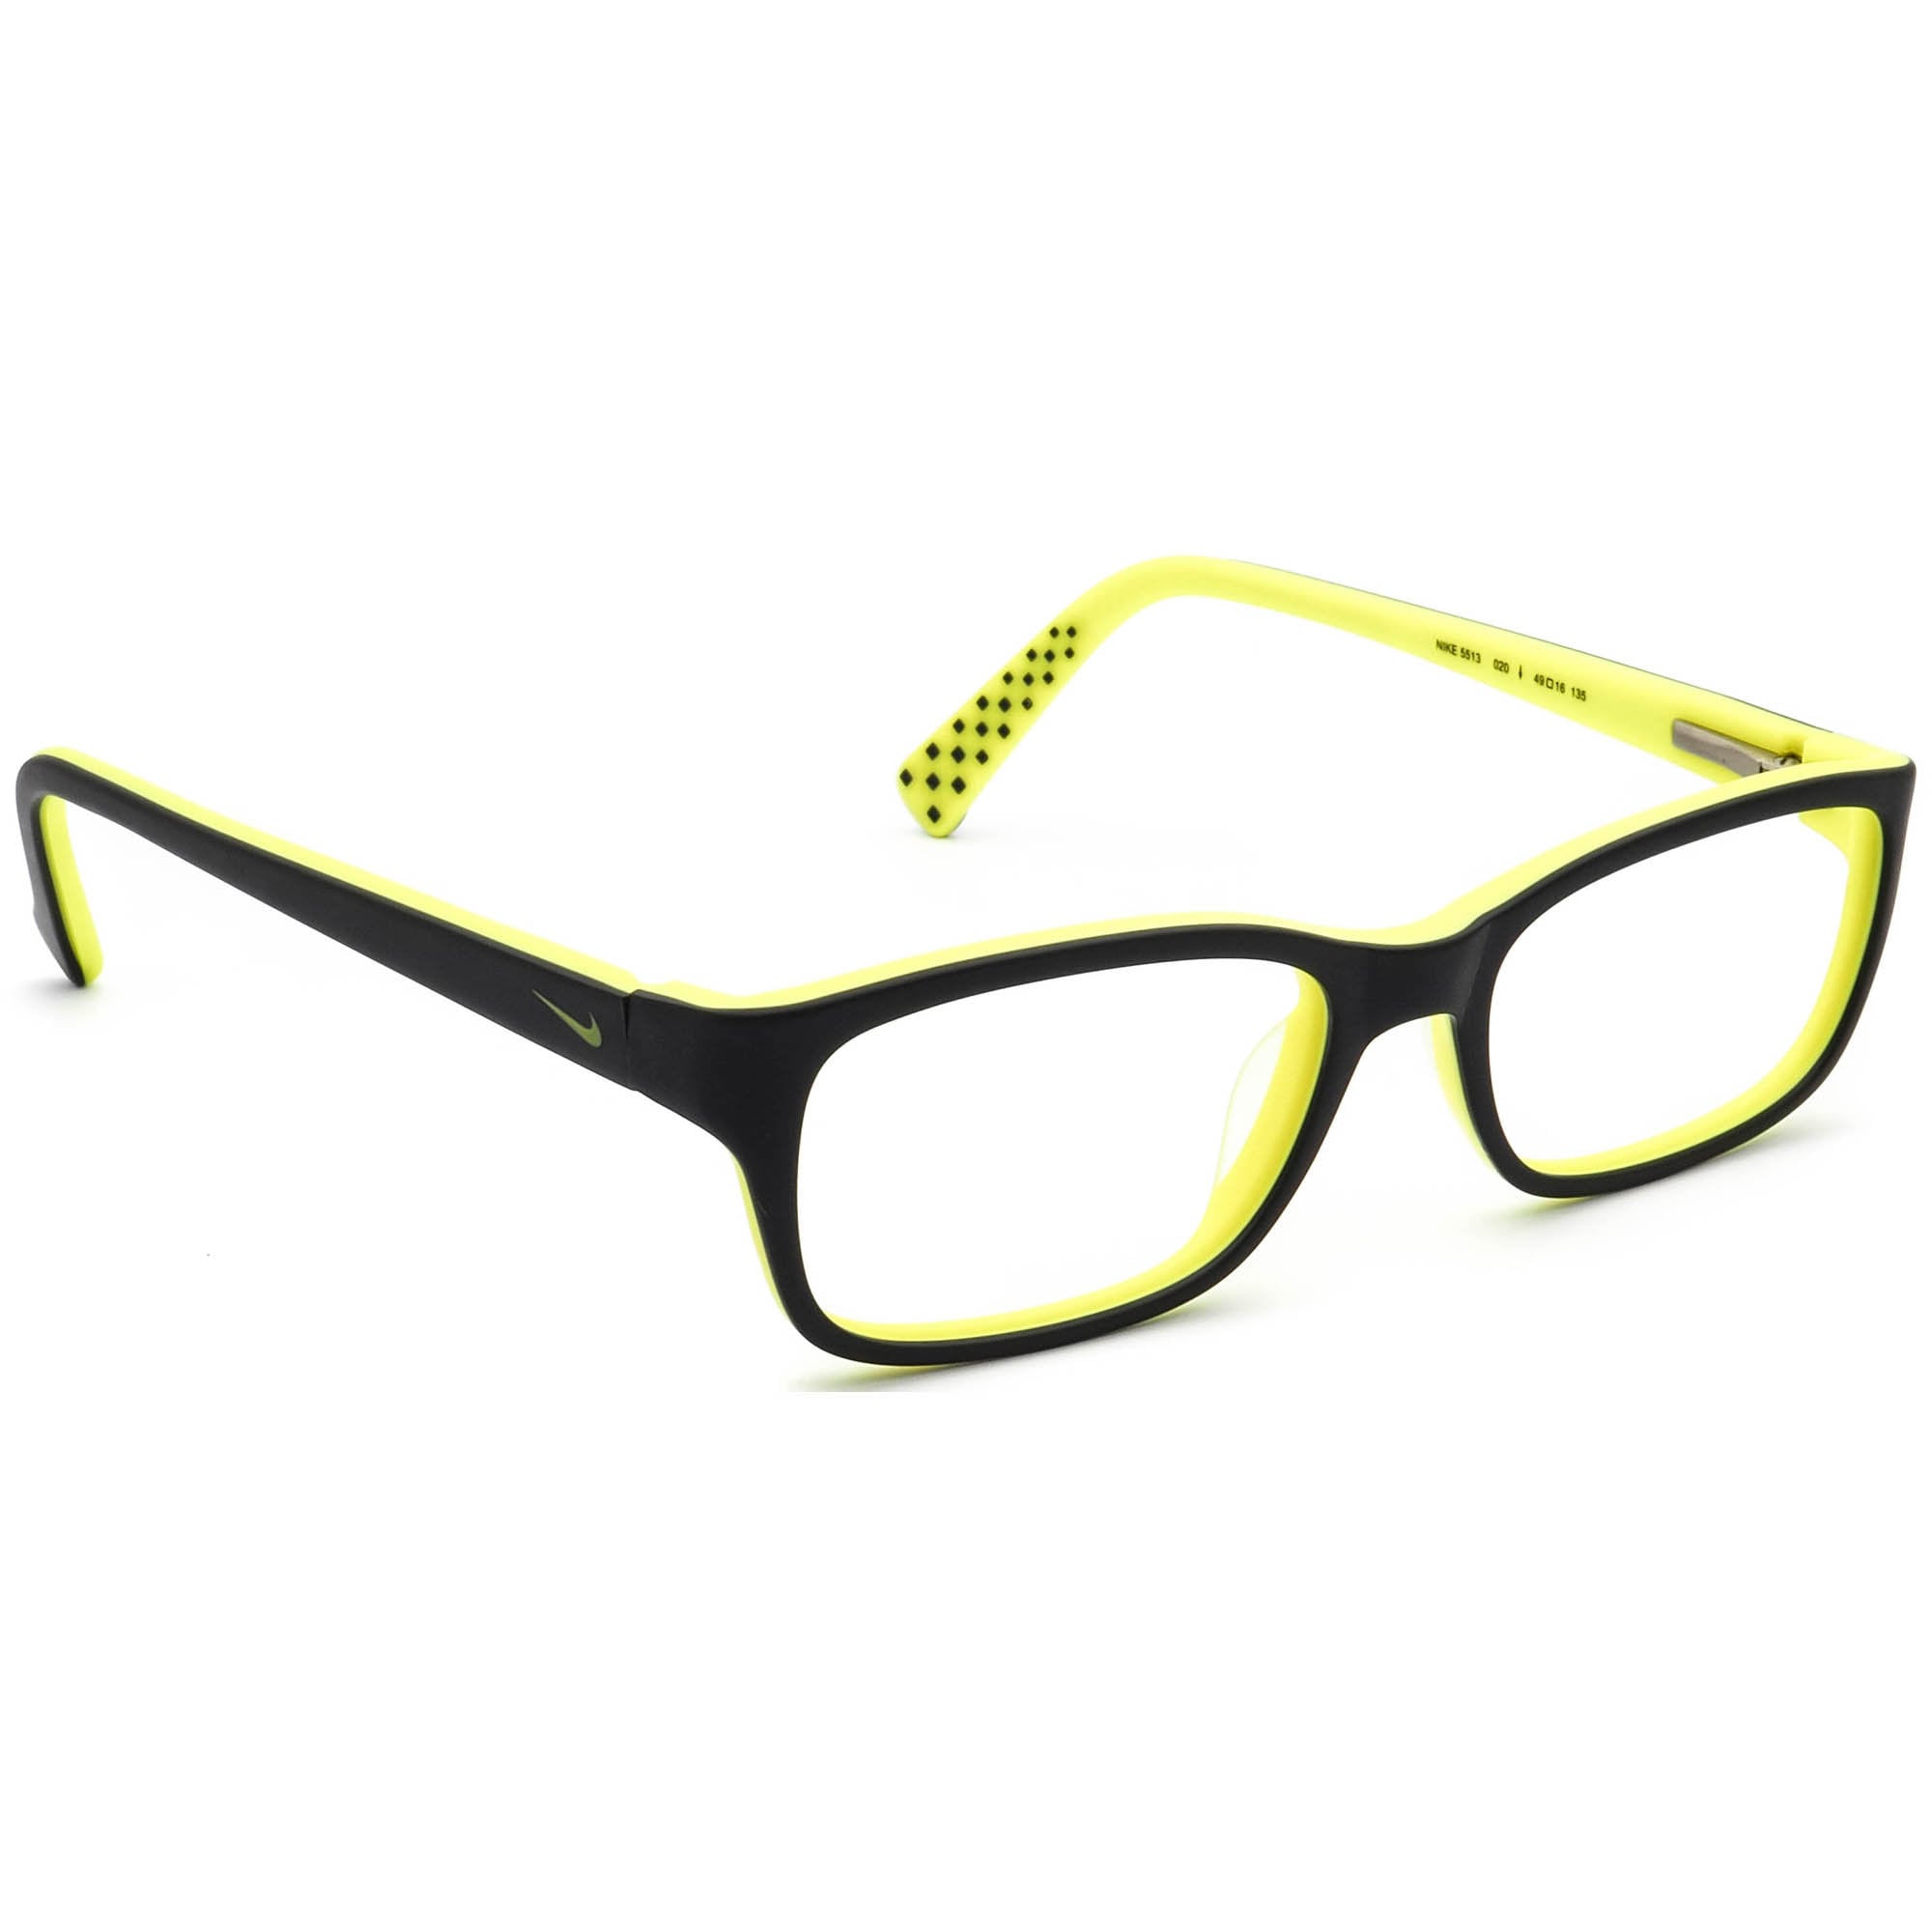 Nike Small Eyeglasses 020 Matte Black/neon Green - Etsy